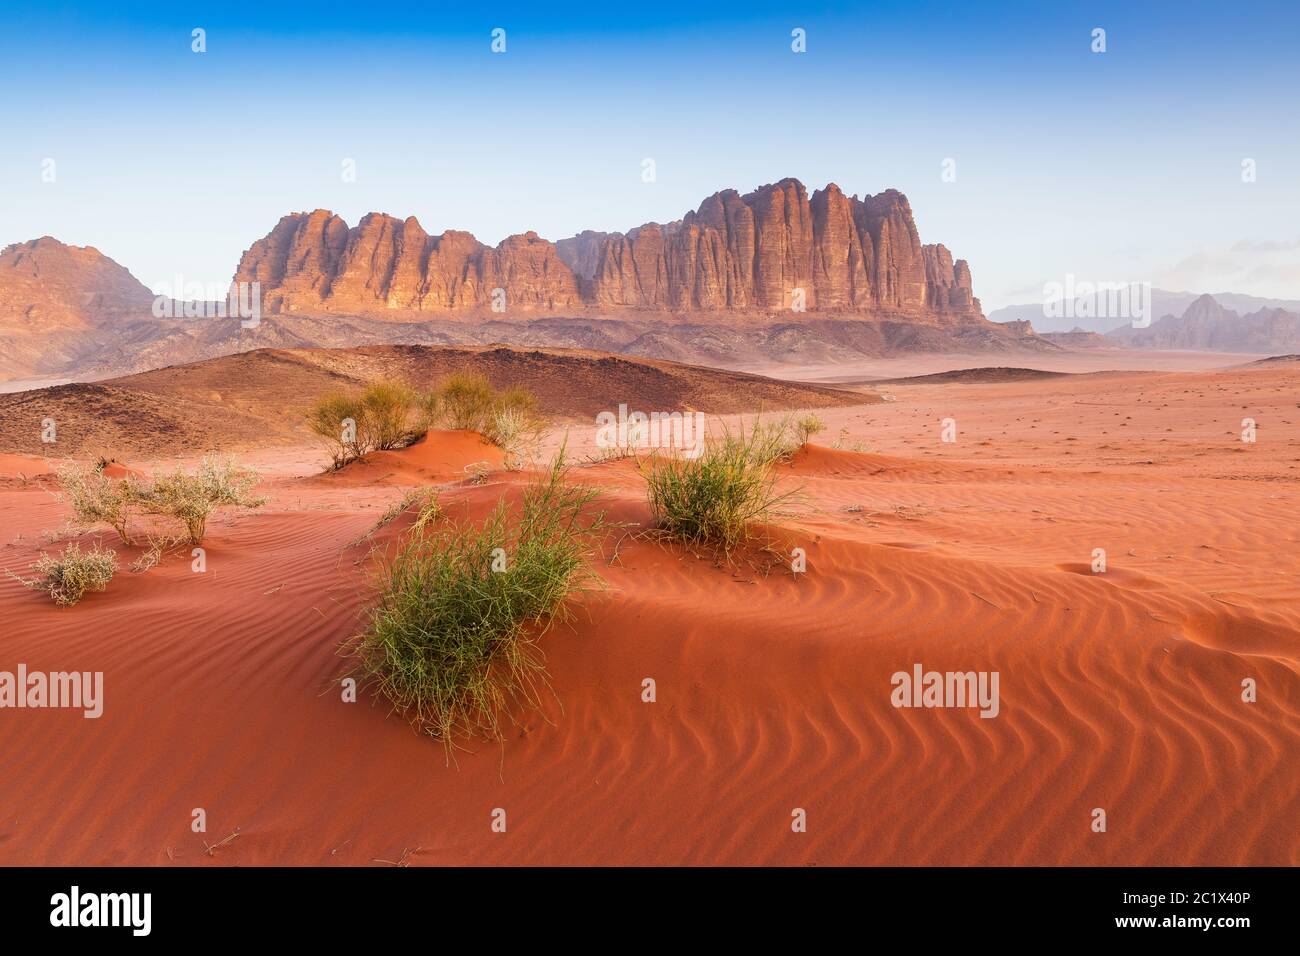 Desierto de Wadi Rum, Jordania. El desierto rojo y la montaña de Jabal al Qattar. Foto de stock